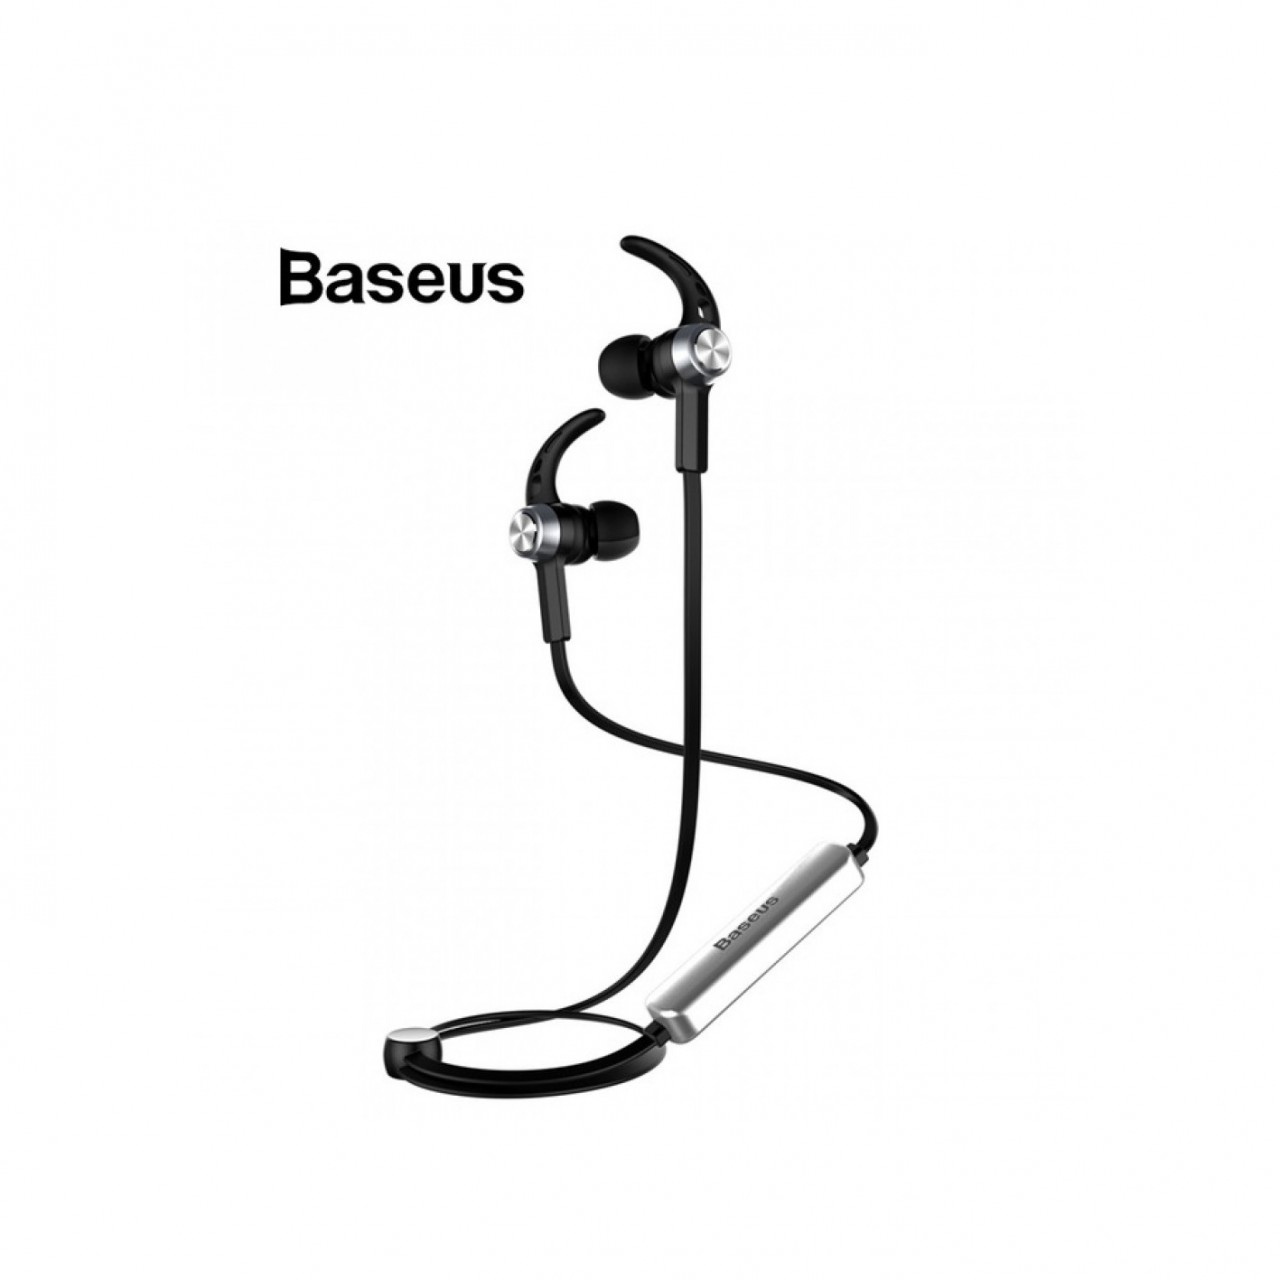 Baseus B11 Wireless Handsfree Earphone With Magnet Lock - 4.1 Bluetooth Technology